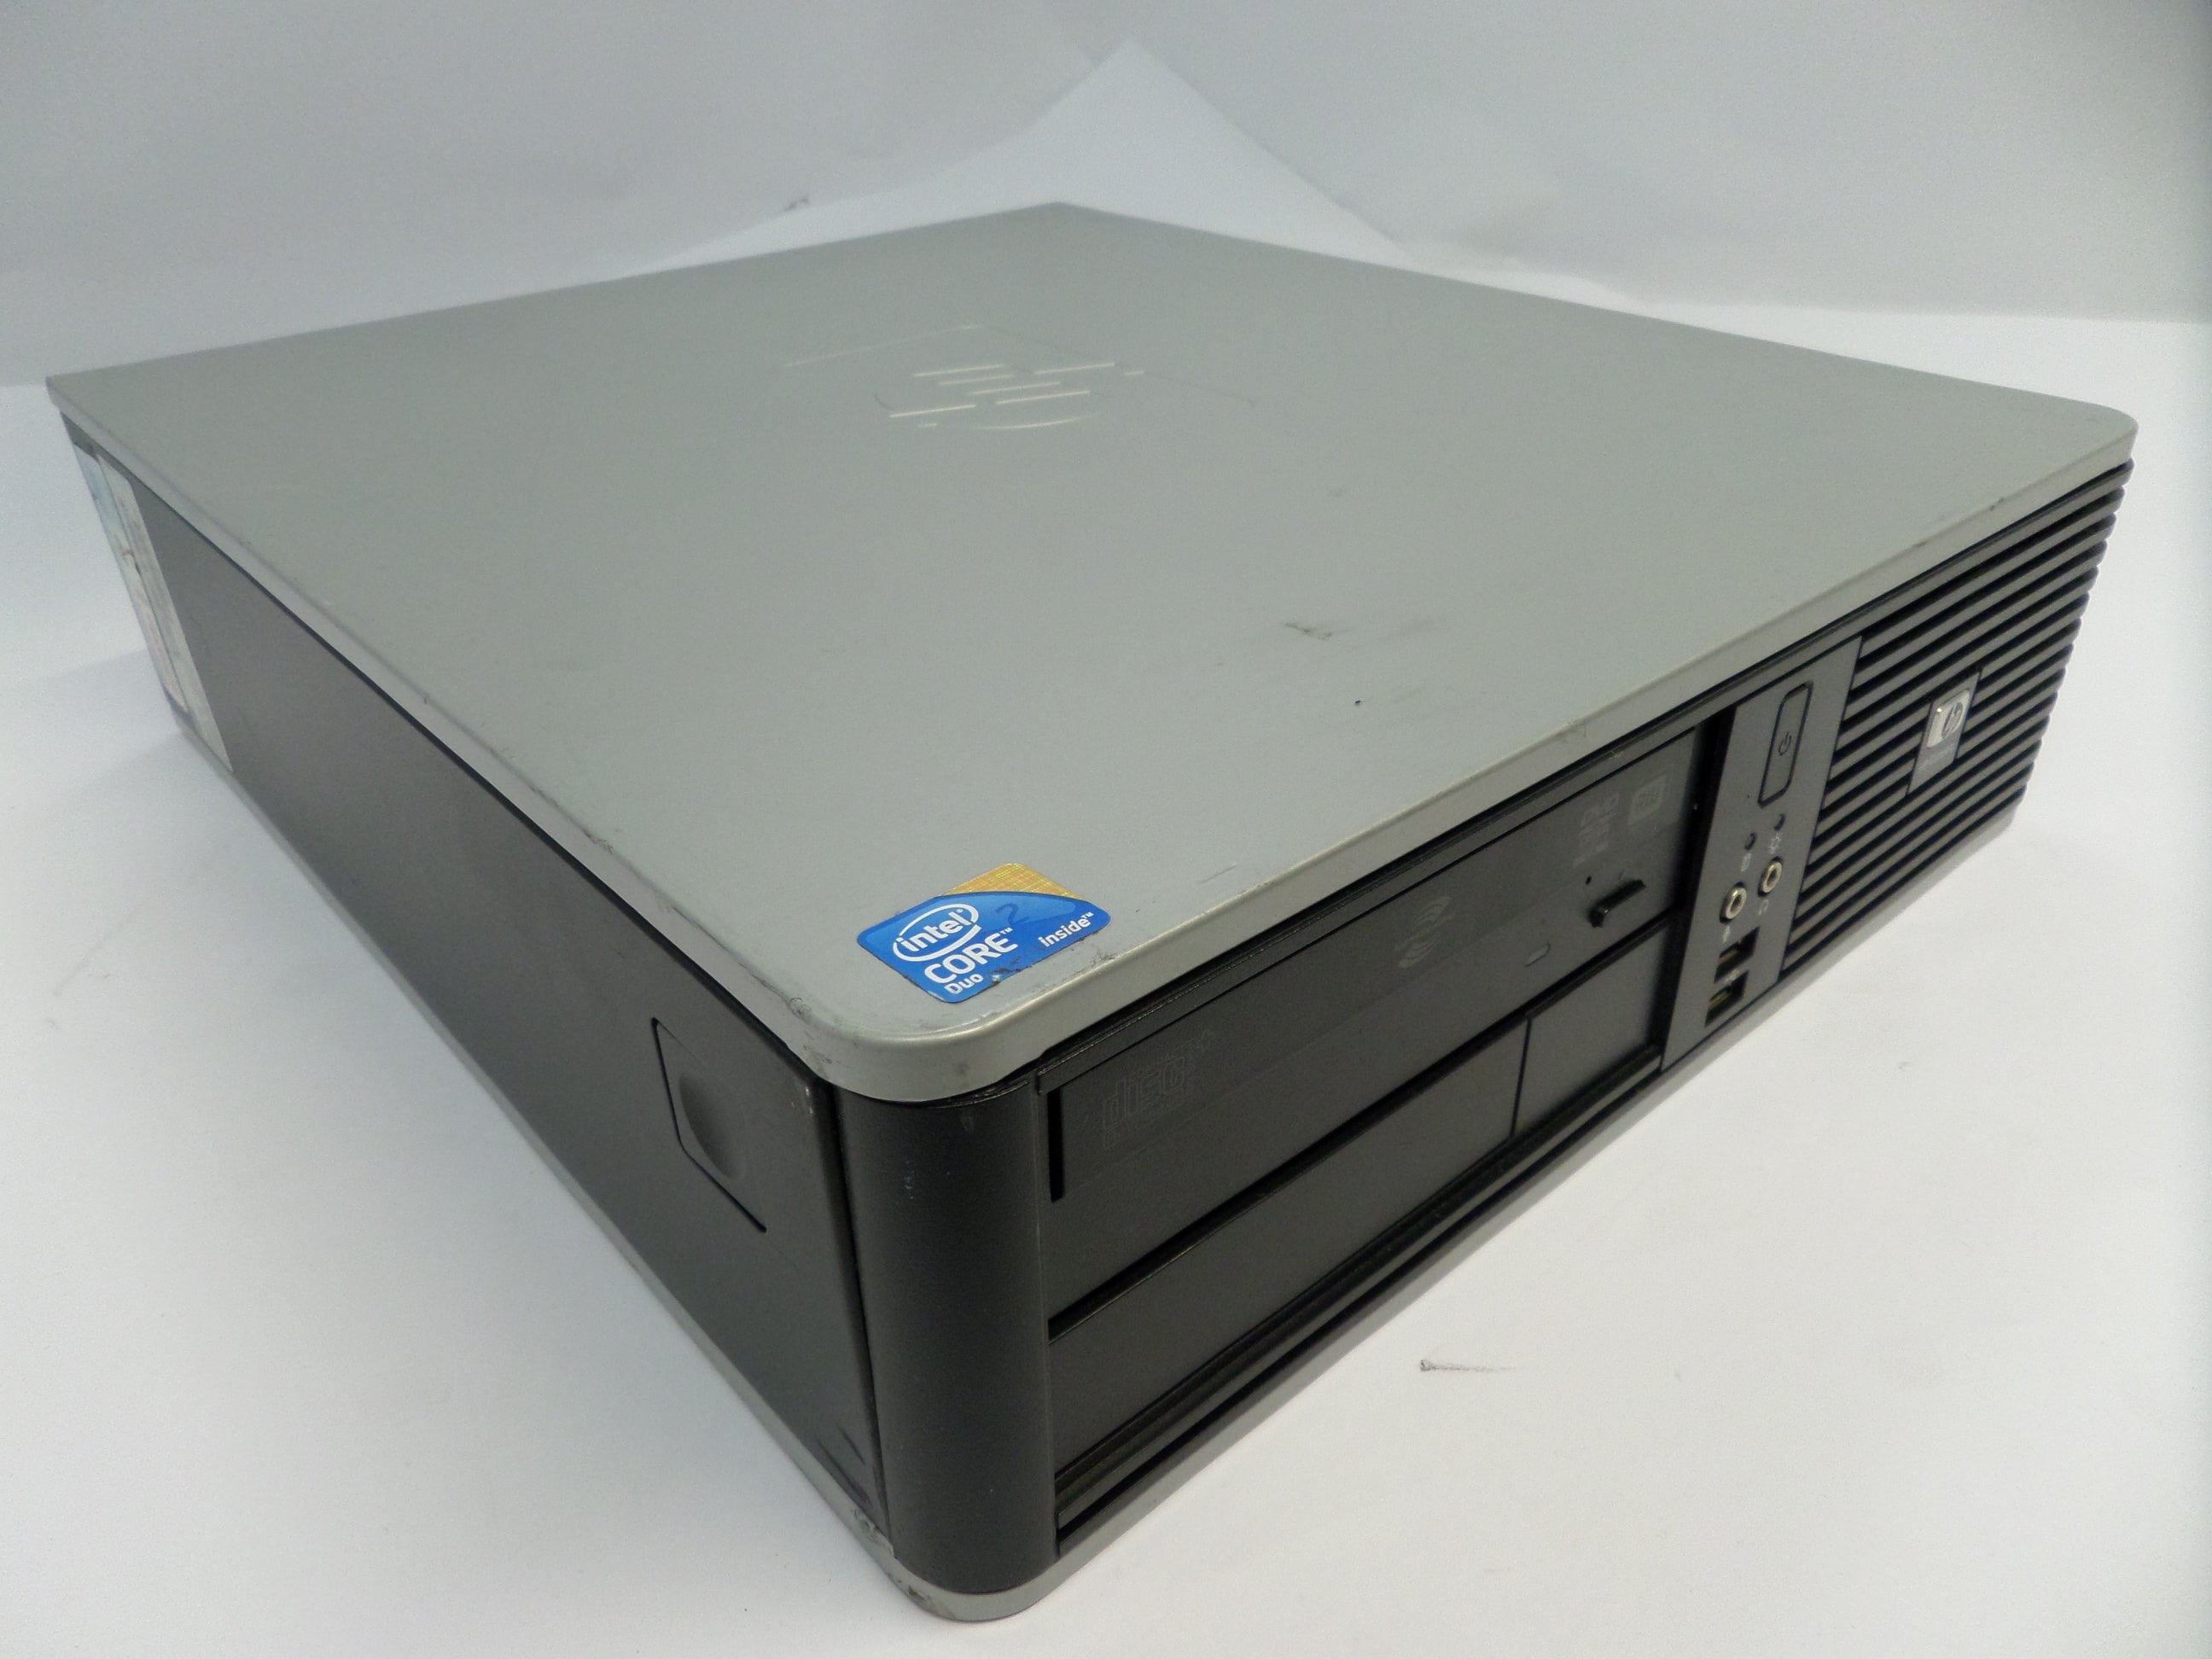 KP721AV - HP Compaq DC7900 Core 2 Duo 2.93GHz 2Gb RAM DVD/RW SFF PC - No HDD - USED